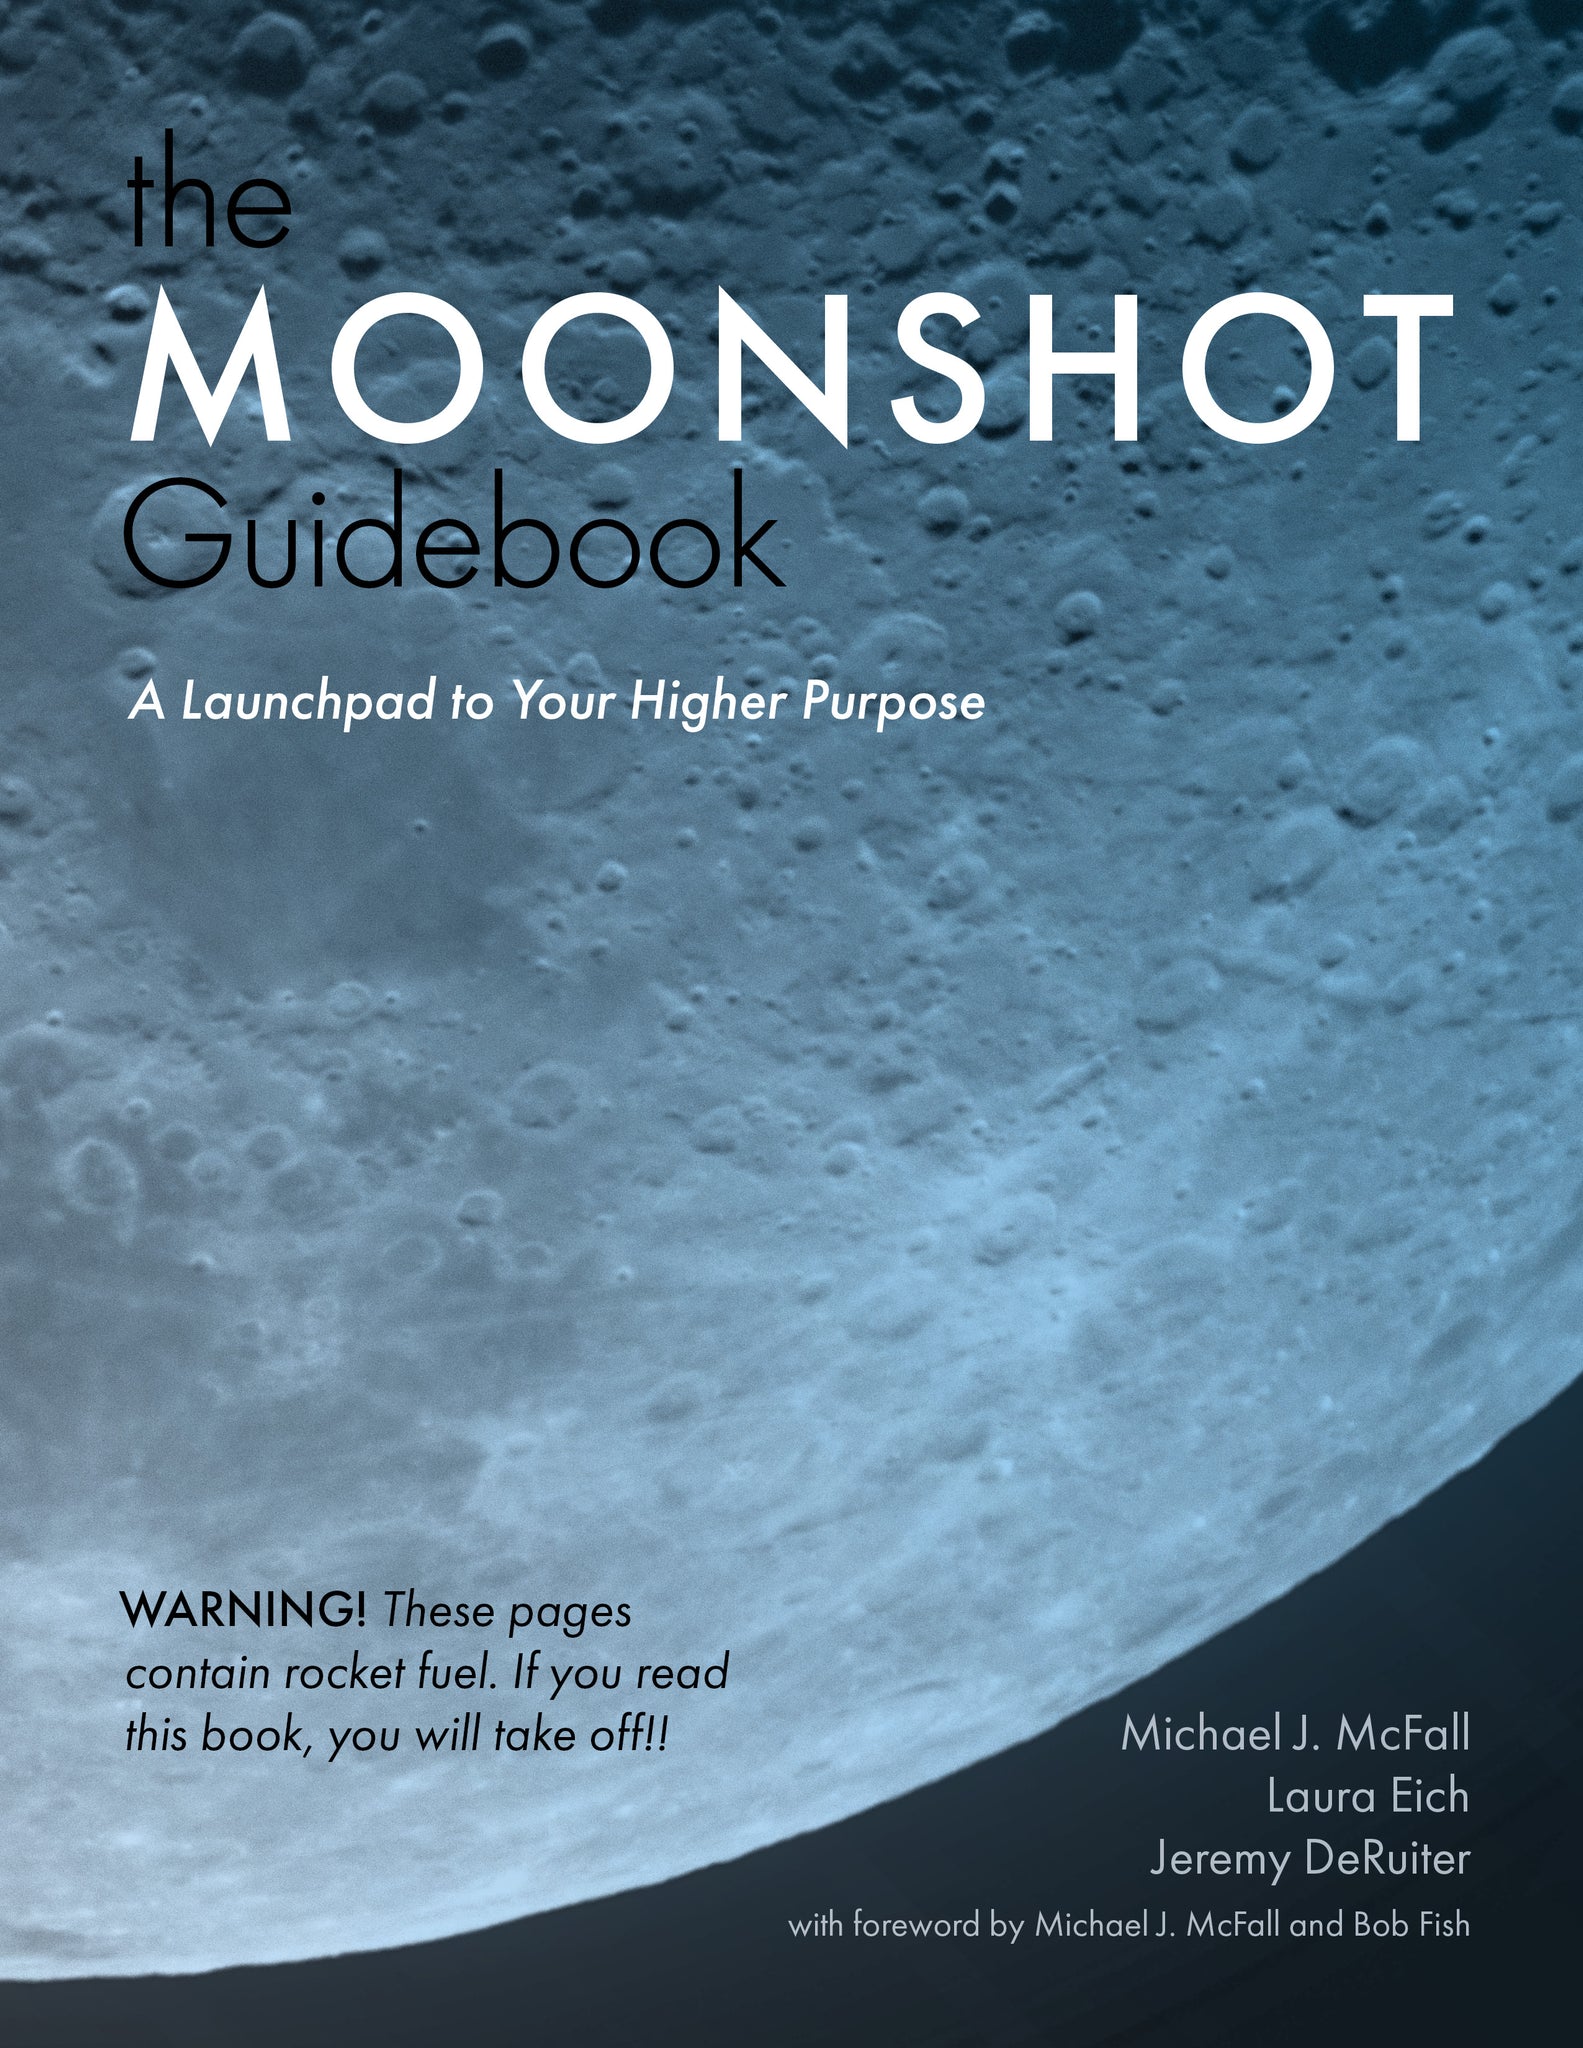 The Moonshot Guidebook